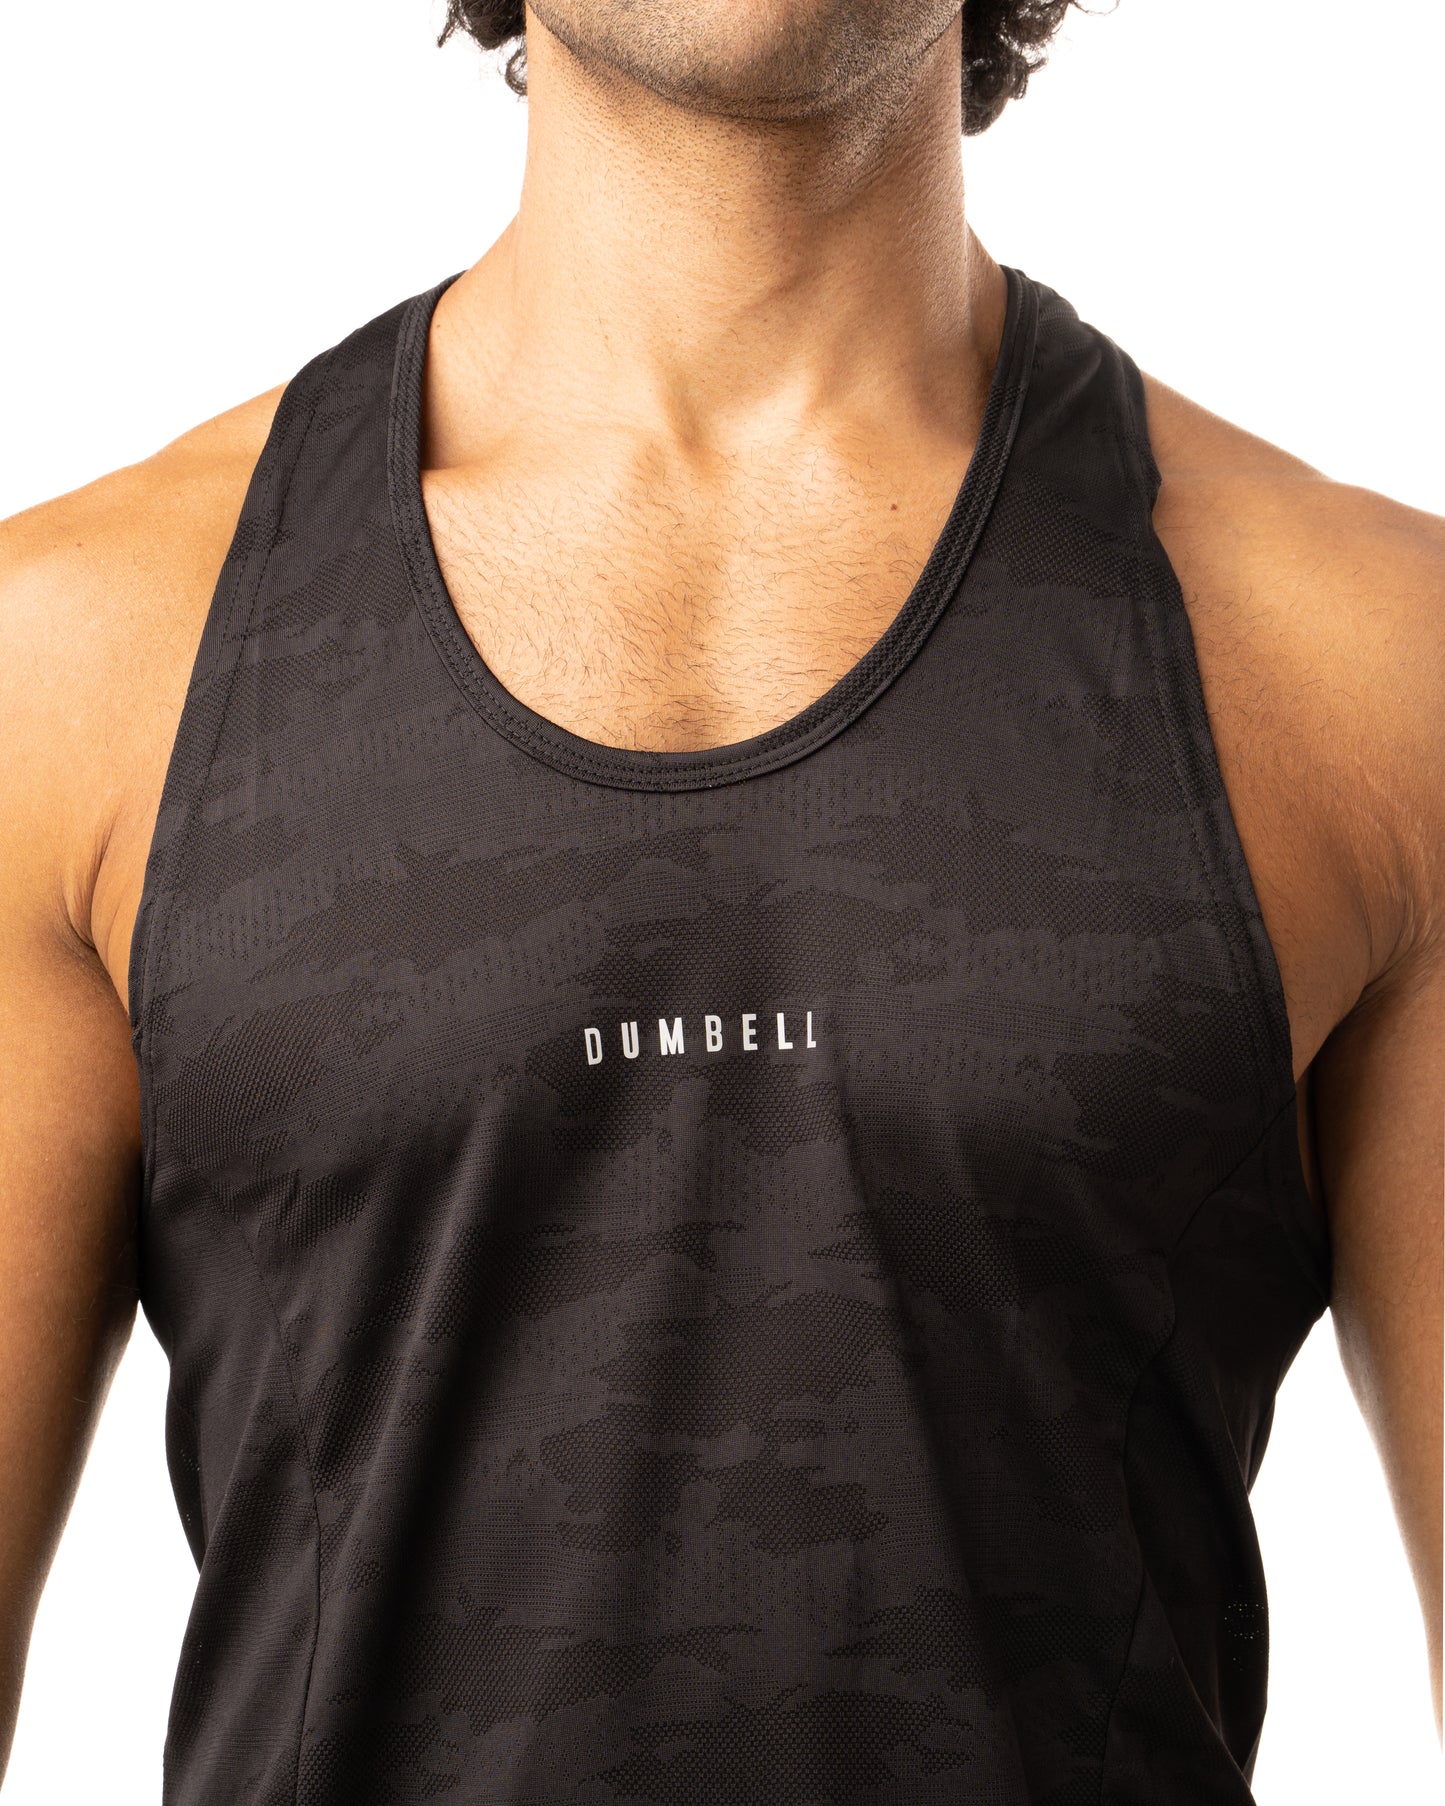 Graphite Black Print-work Men's Athletic Tanks by Dumbell Wear